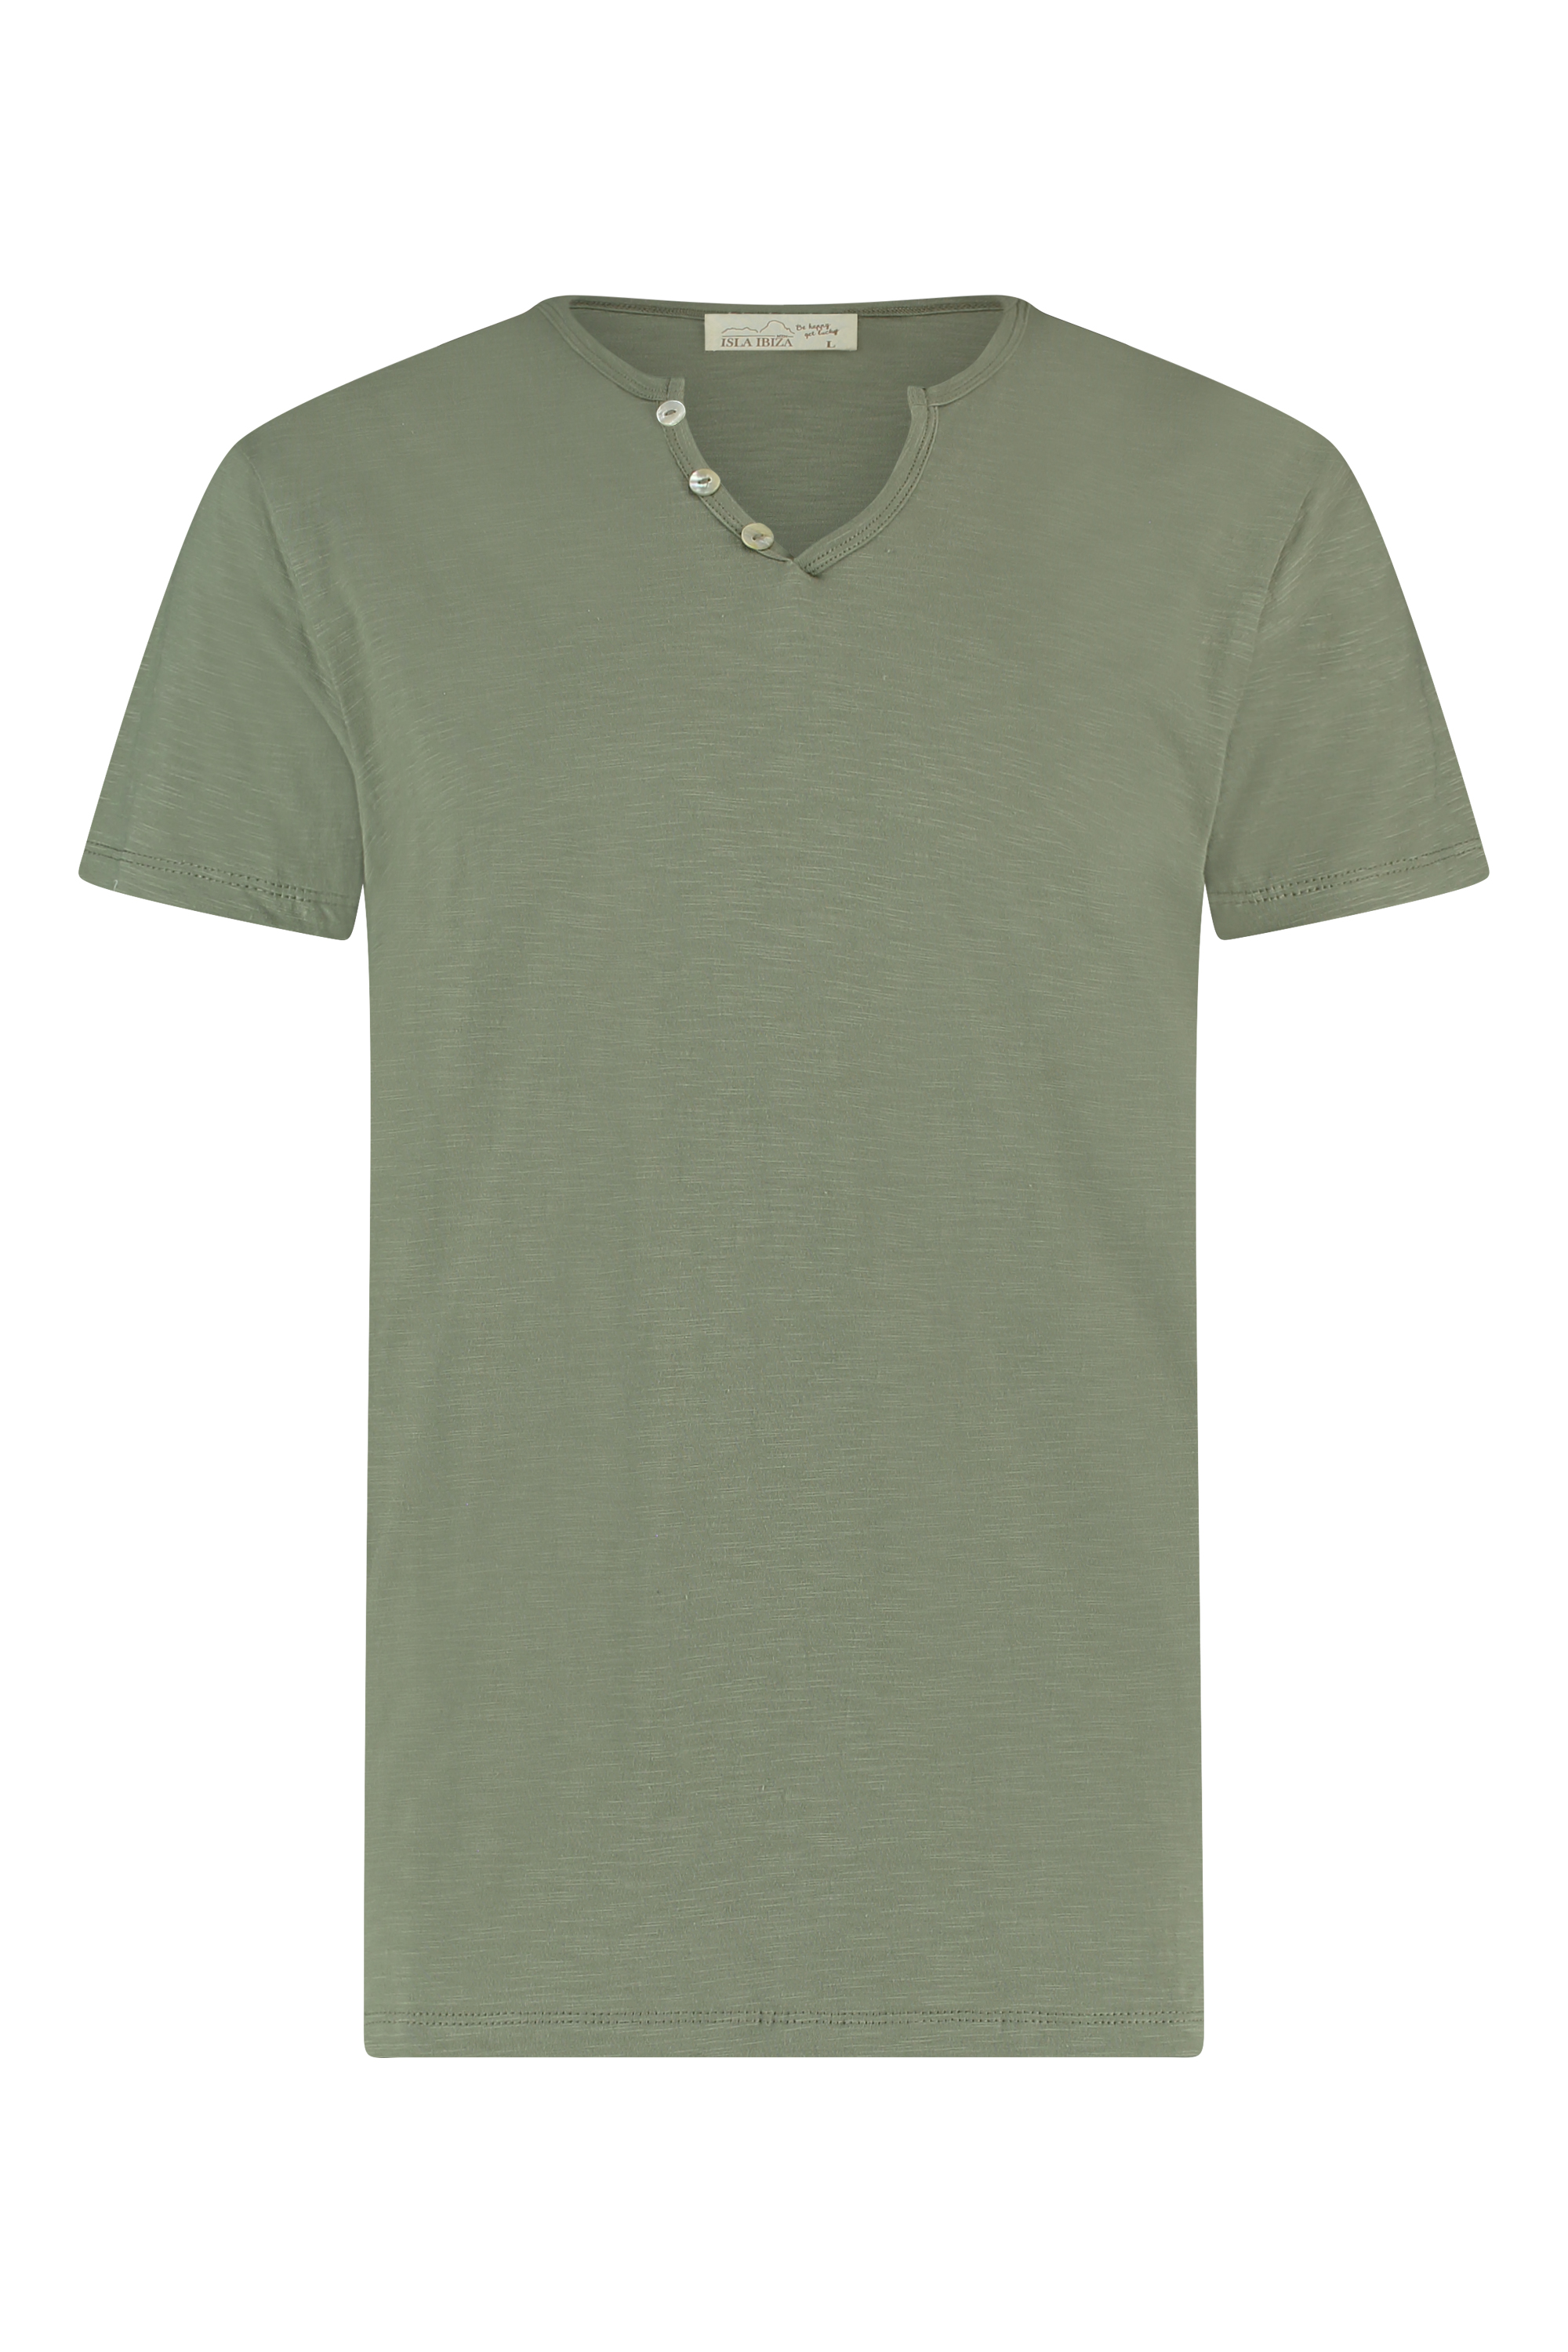 Basic T’Shirt Del Mar Khaki Army – Green